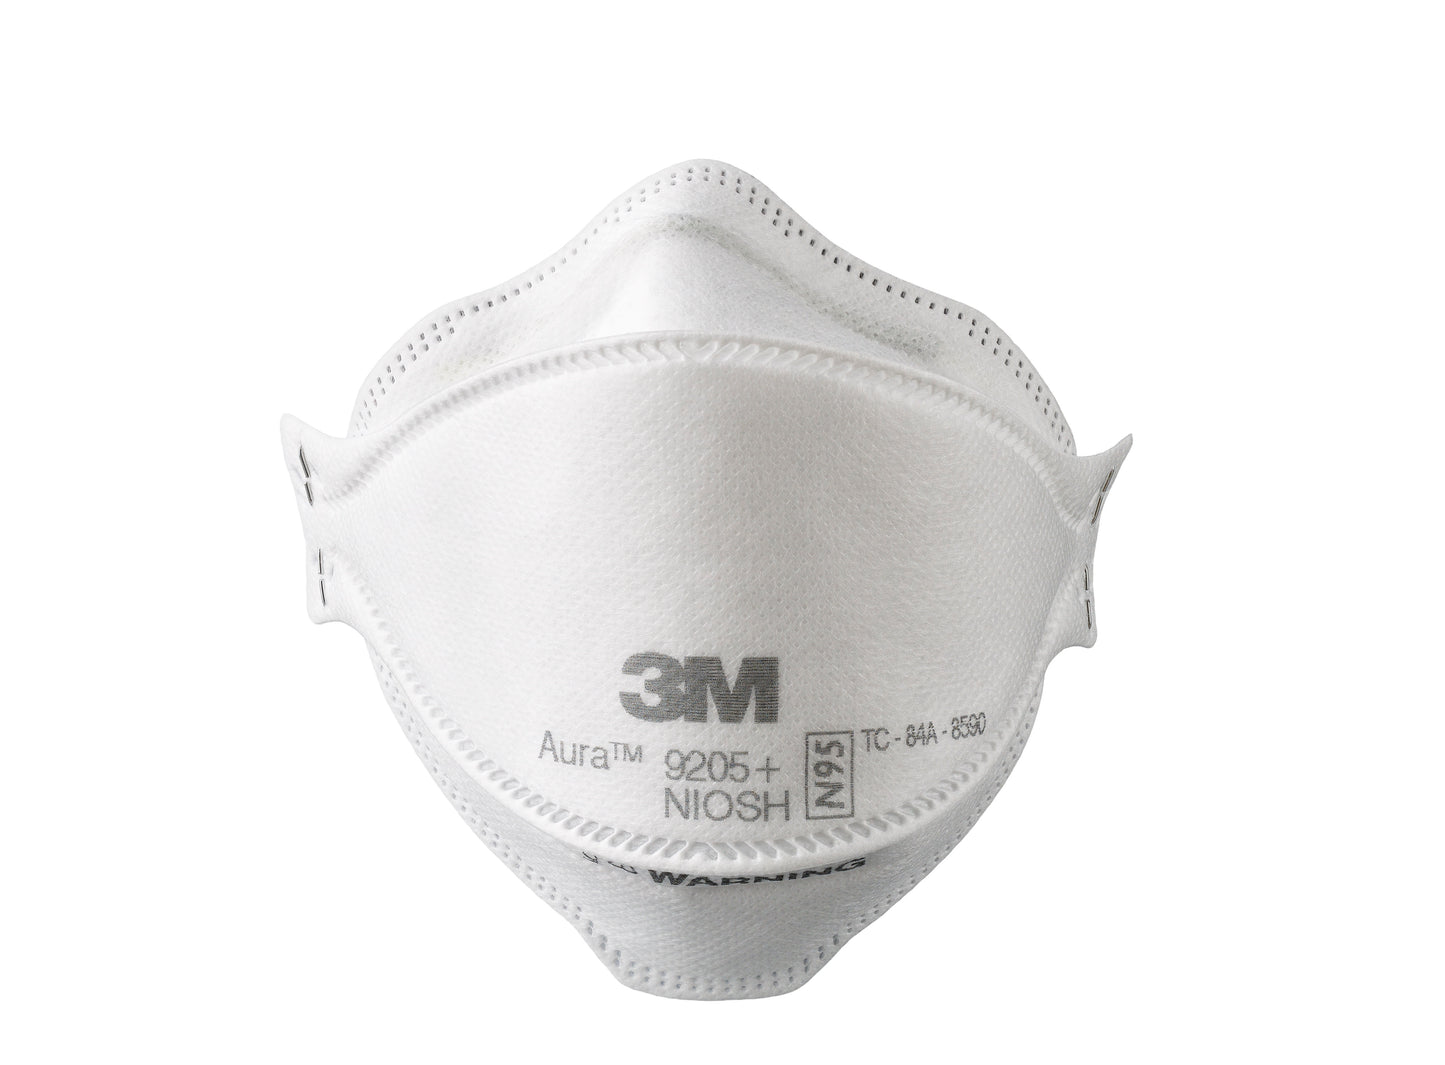 3M Aura 9205+ NIOSH N95 Respirator Mask - Made in Canada/USA